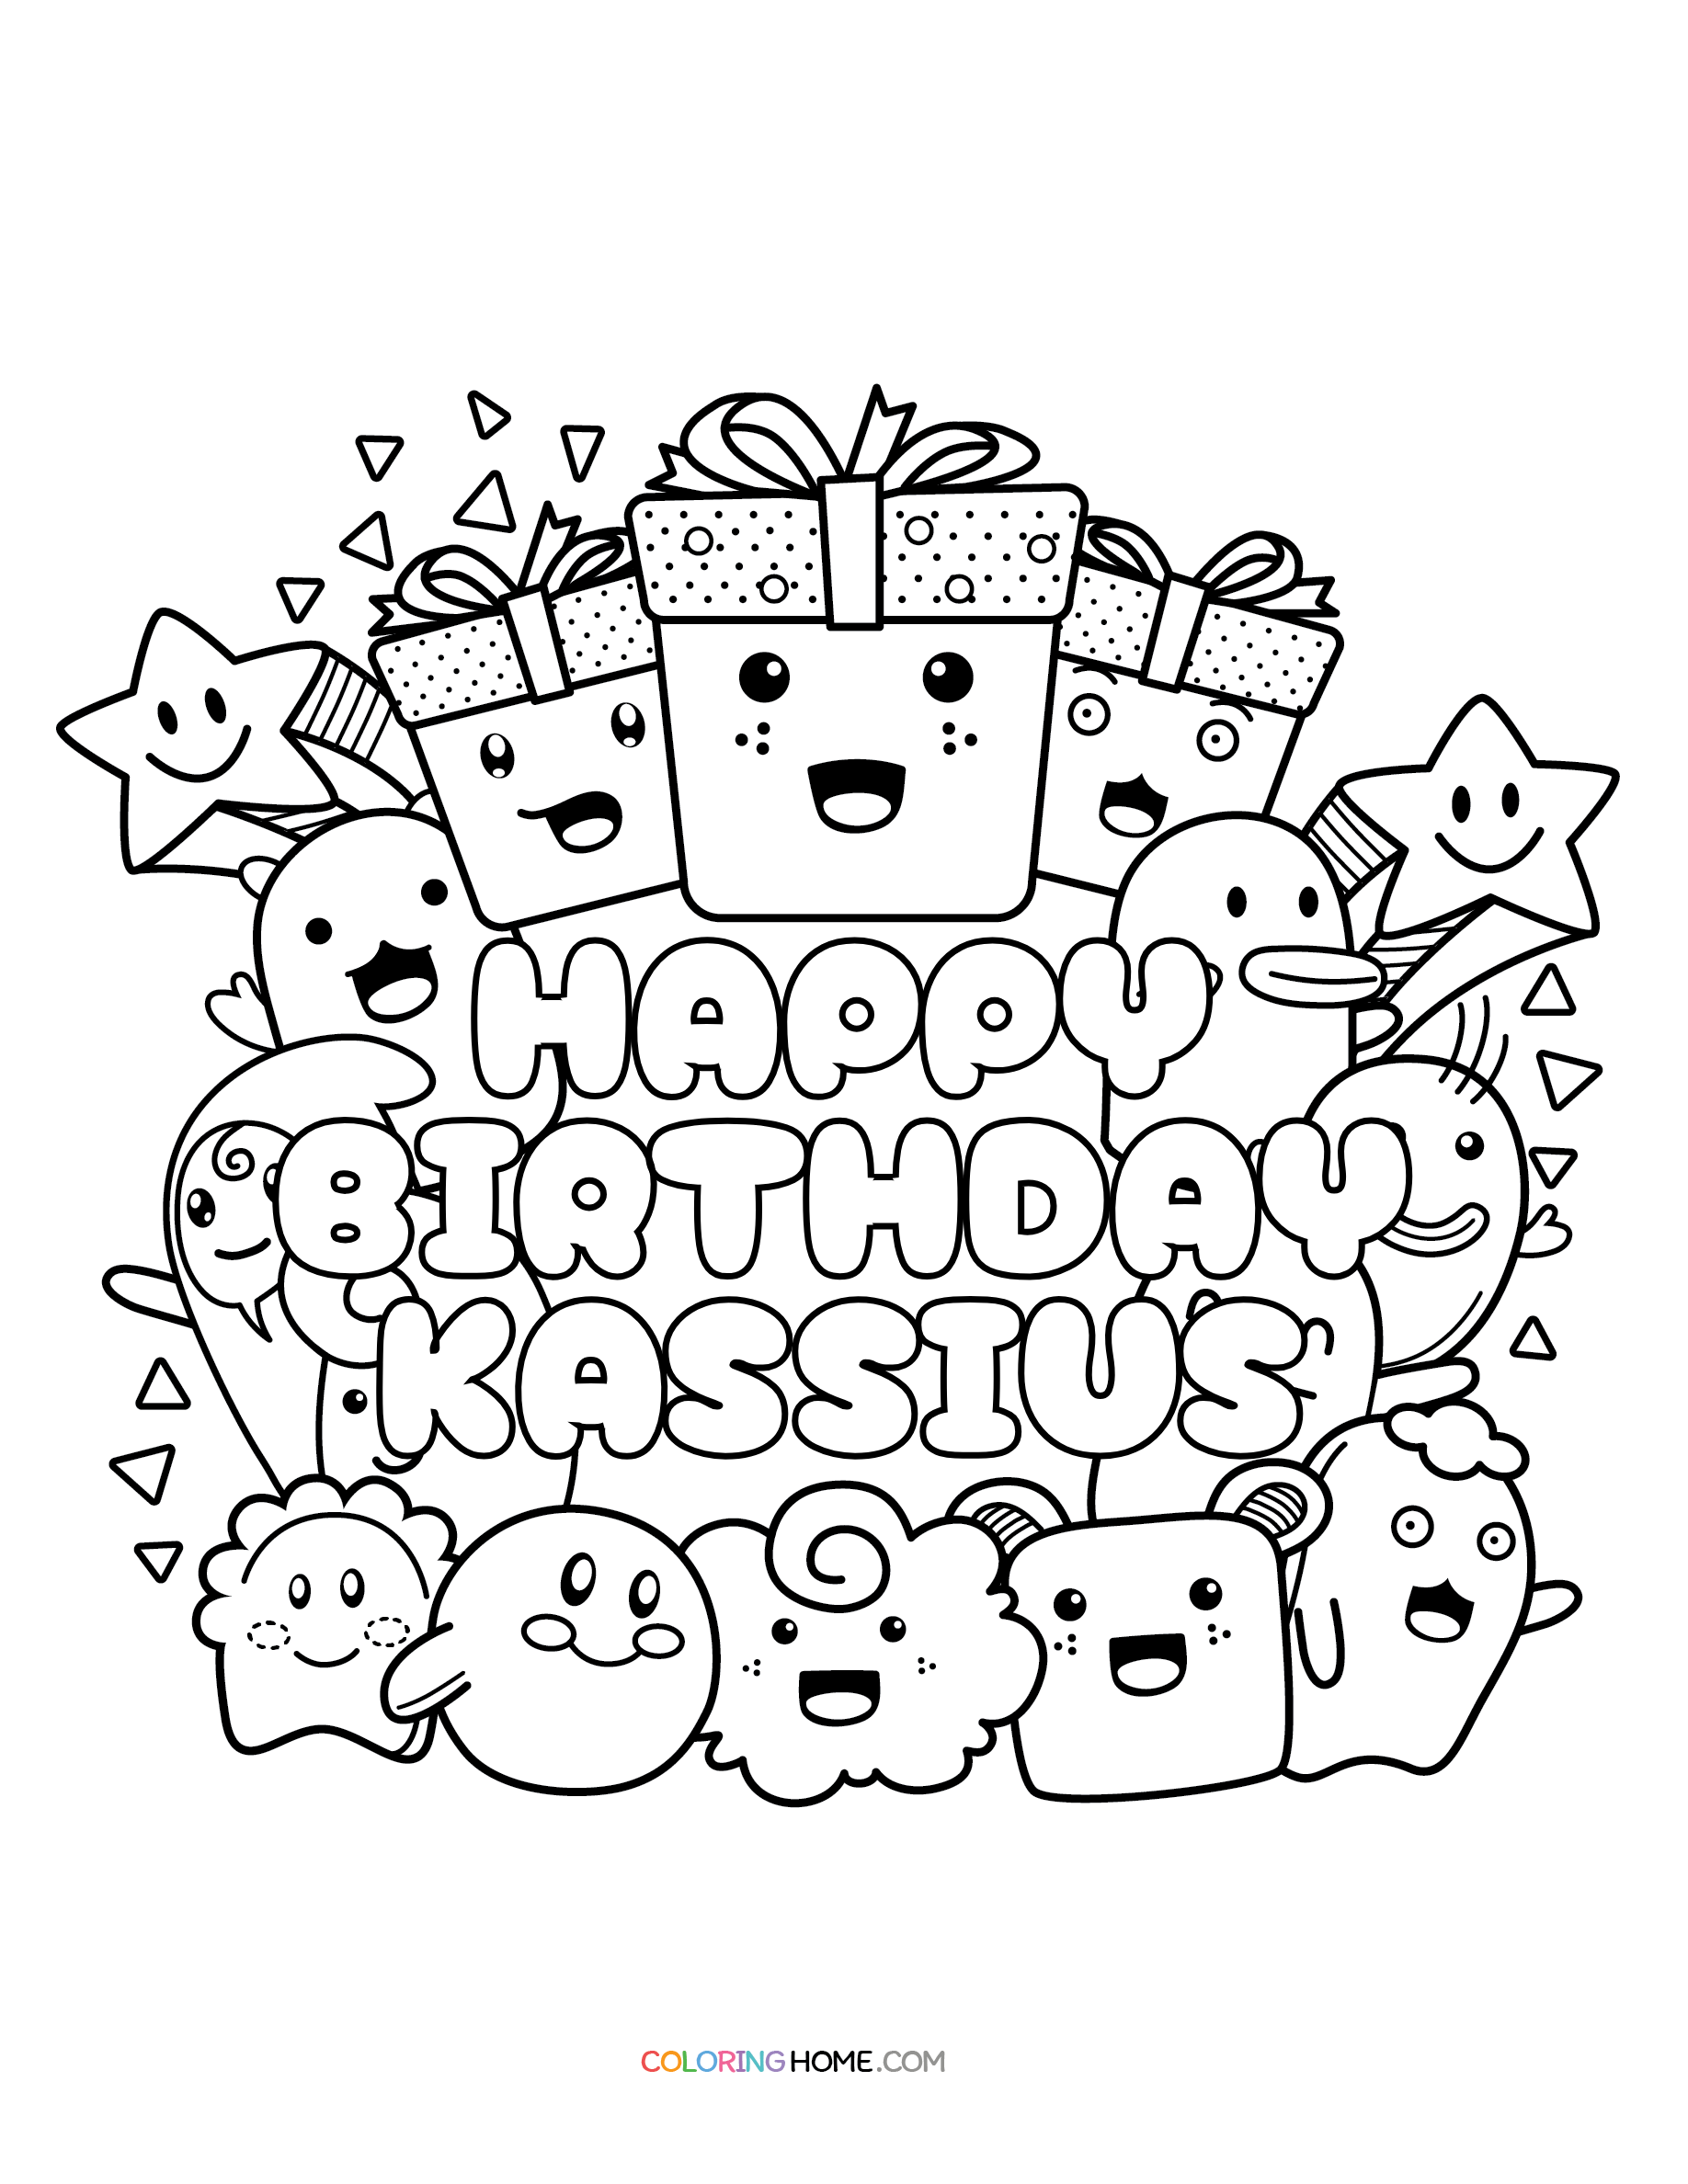 Happy Birthday Kassius coloring page